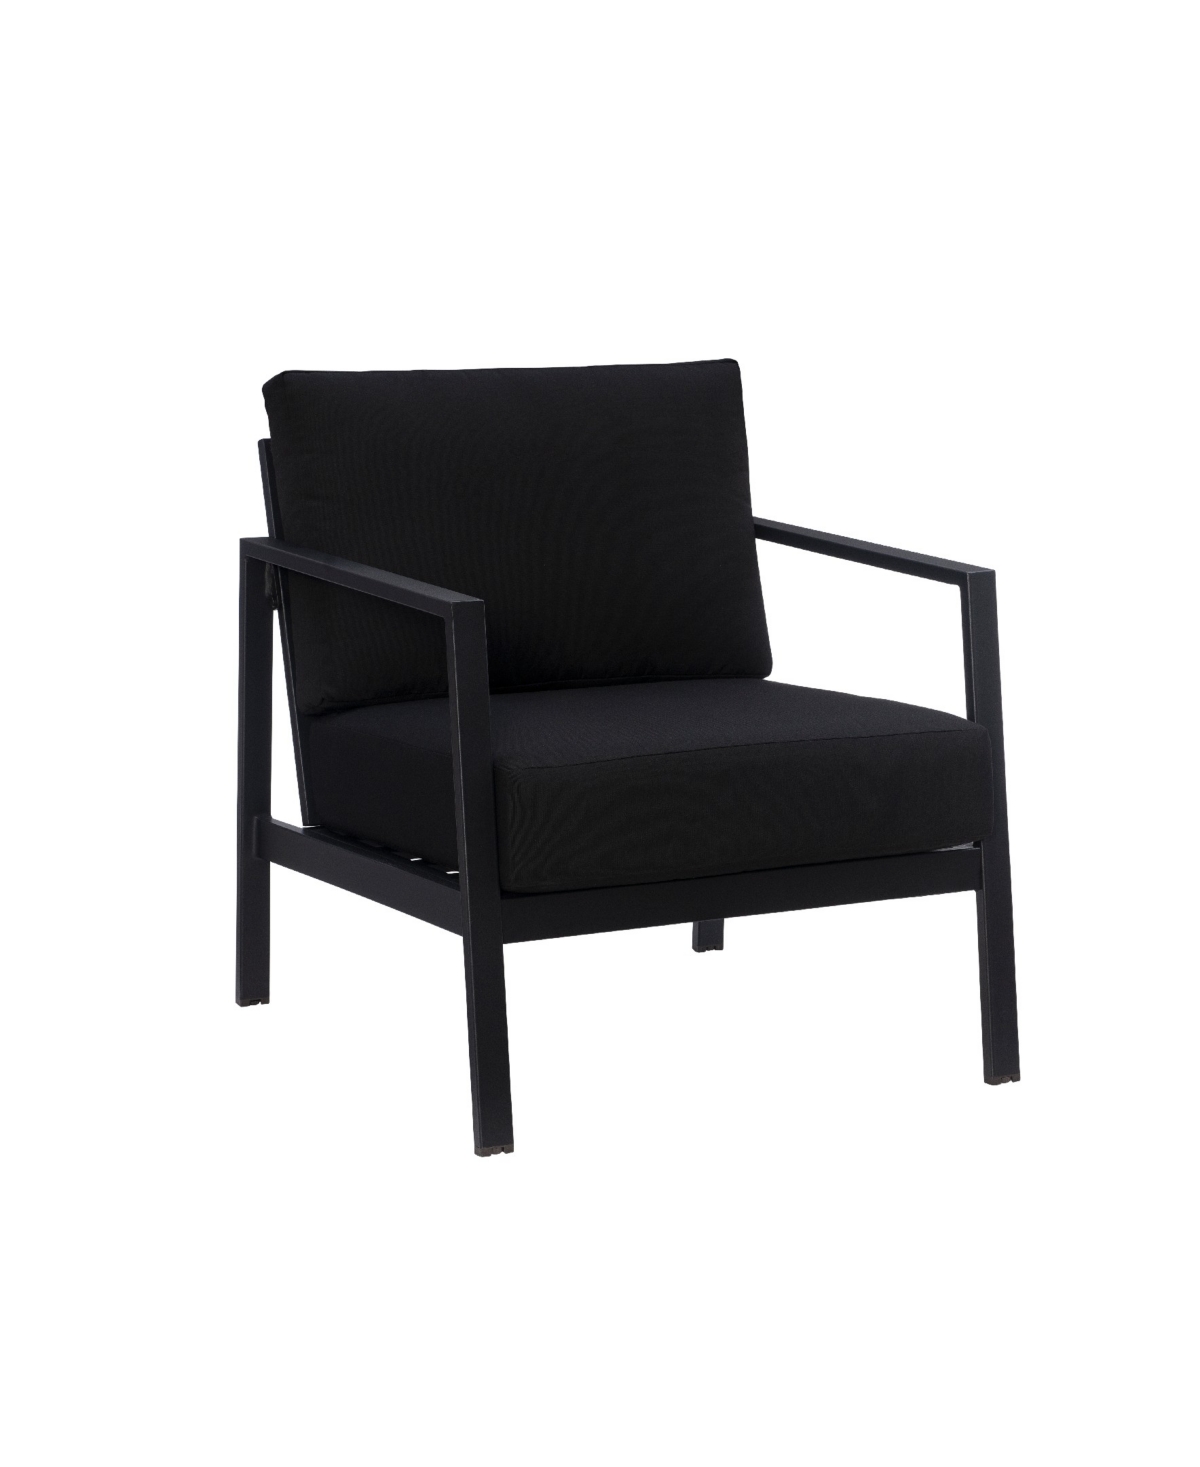 Linon Home Decor Acadian Outdoor Chair In Black